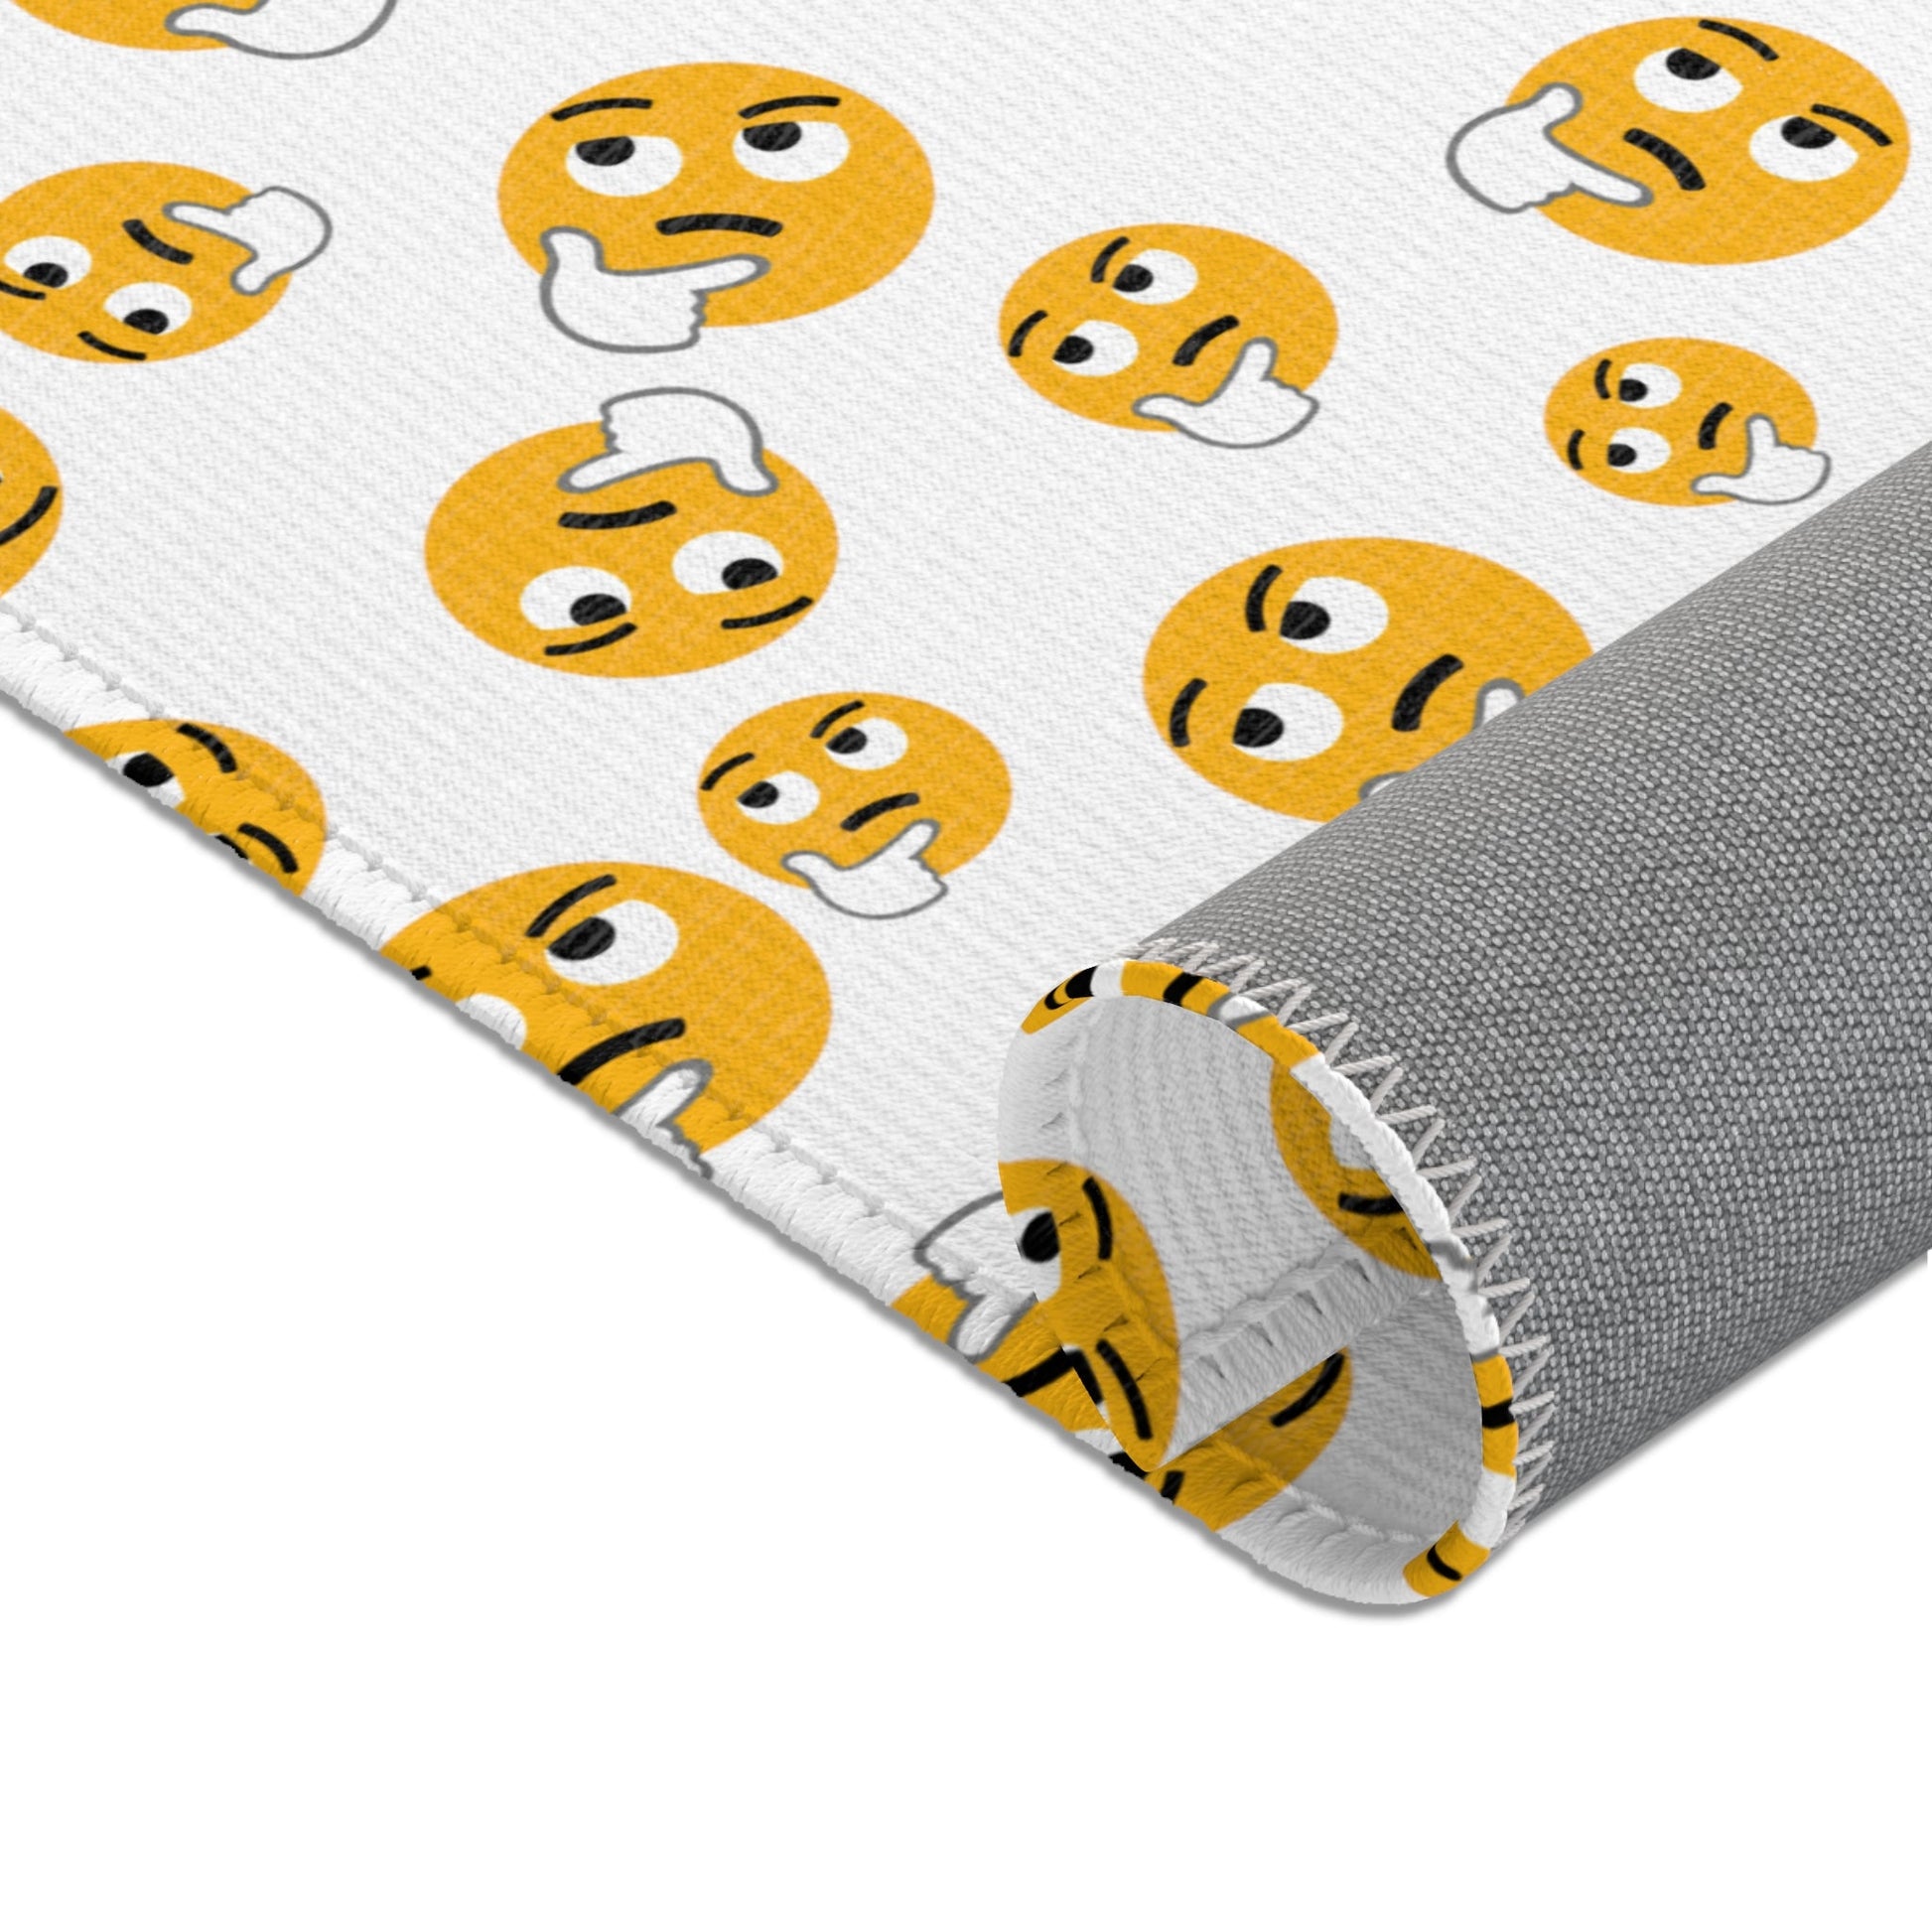 Emoji Area Rugs - Wet Sundays